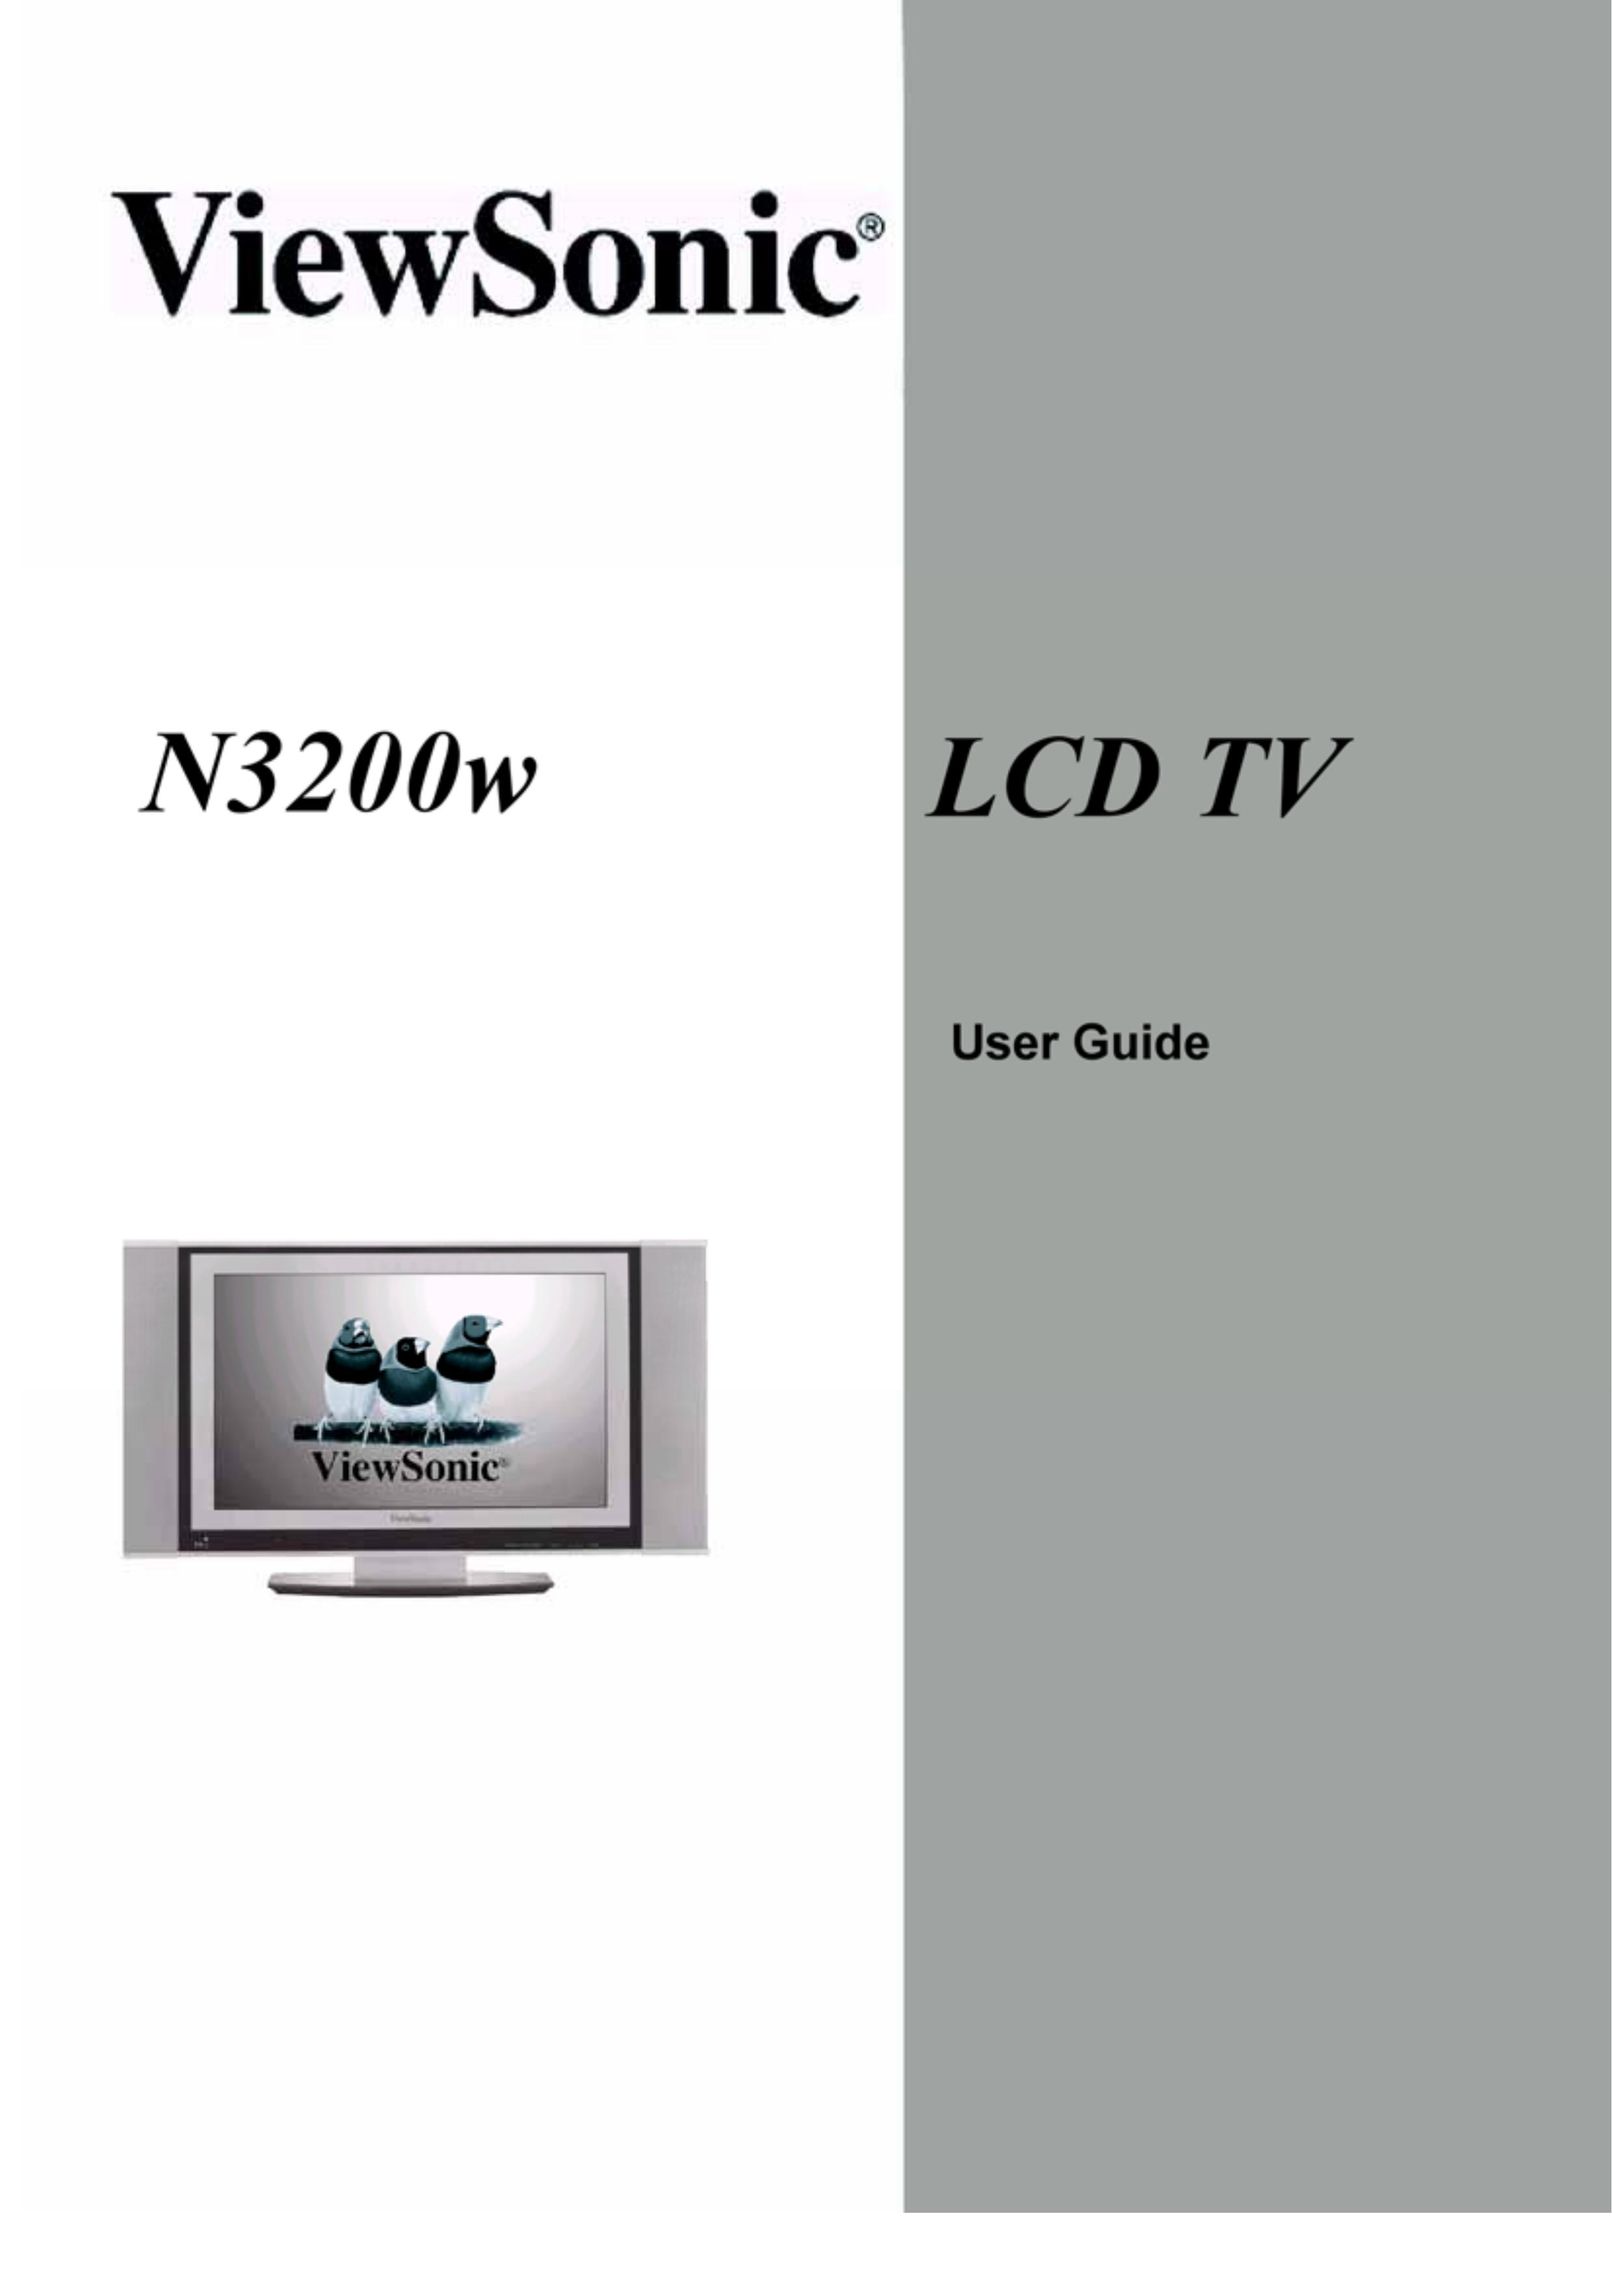 ViewSonic N3200w Flat Panel Television User Manual